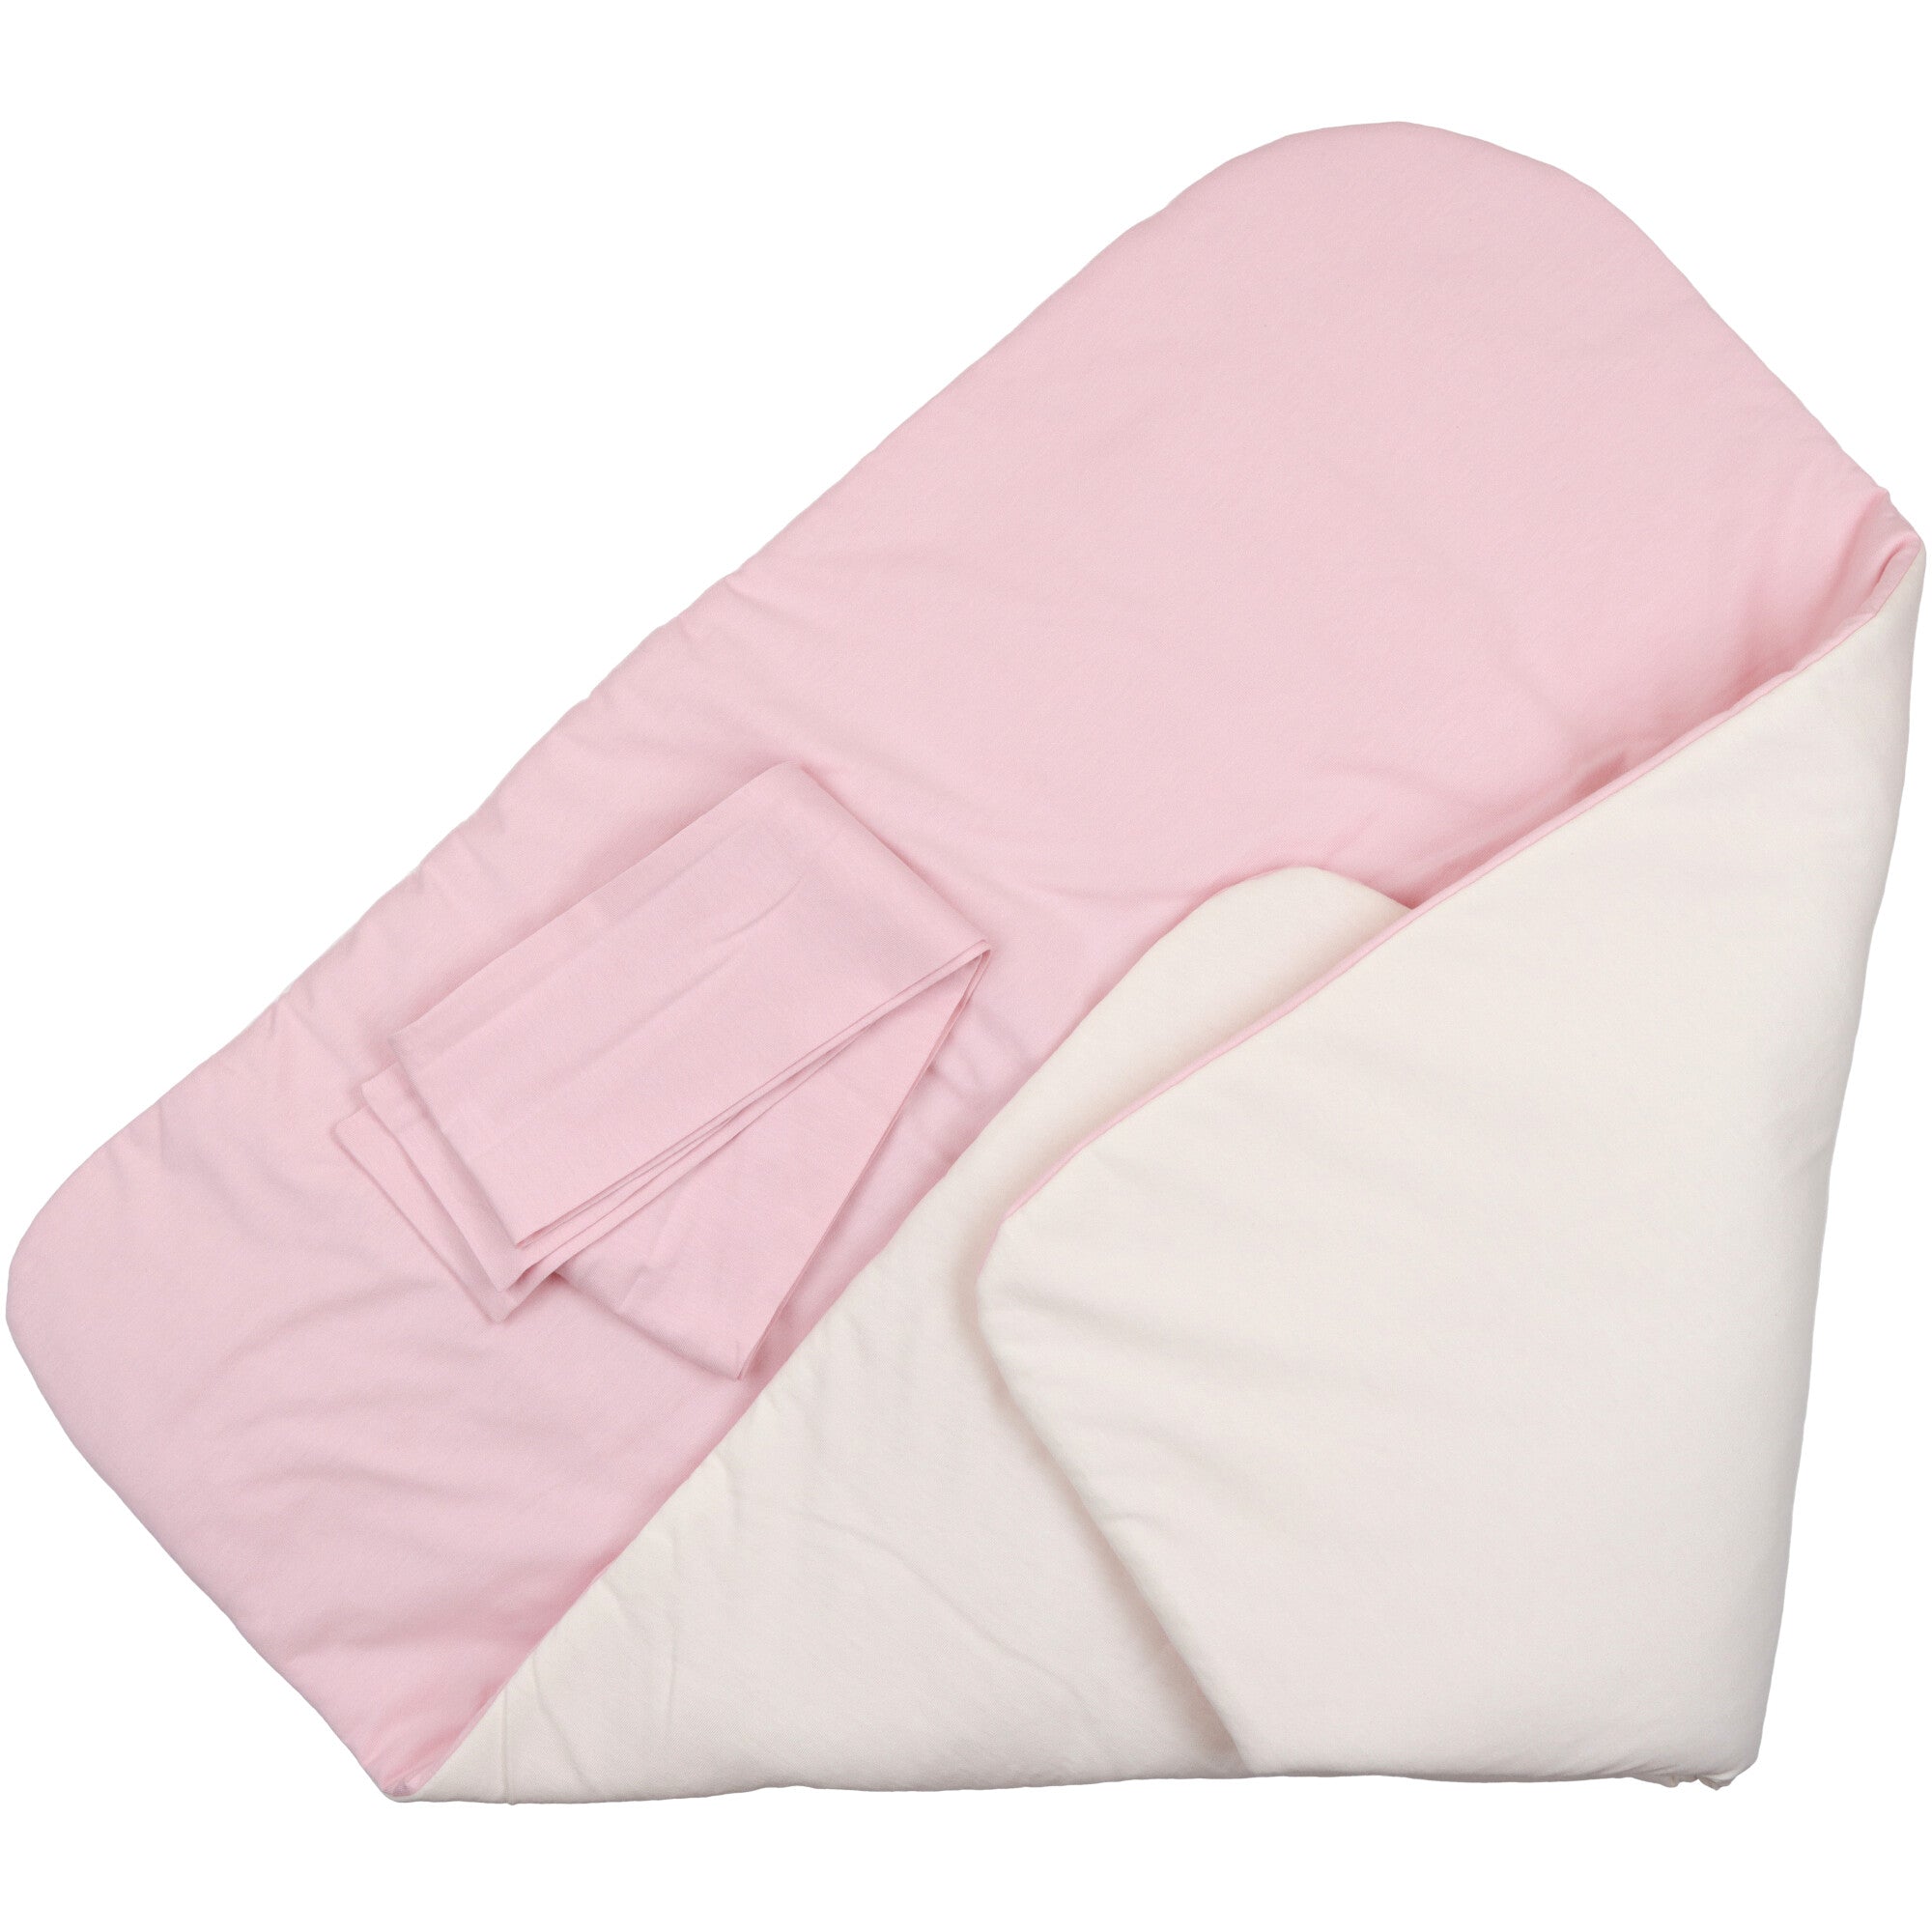 coperta-avvolgente-leggermente-imbottita-colore-rosa